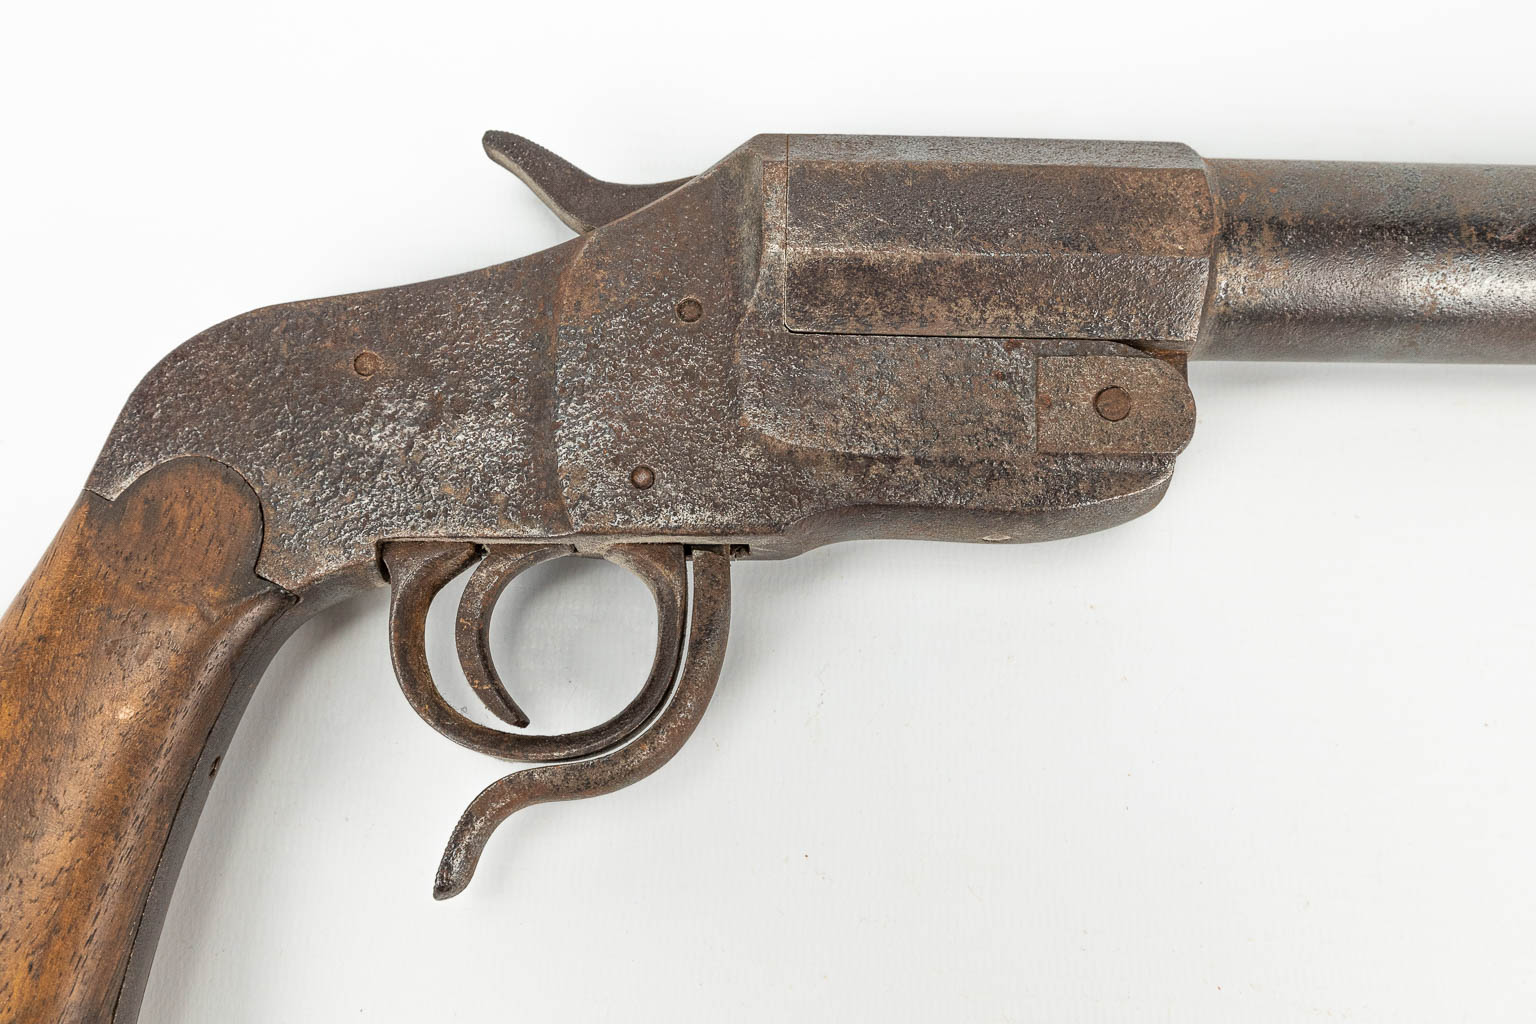 A signal pistol "Hebel", model 1894 en gemerkt JGA. An alarm pistol made in Germany. 